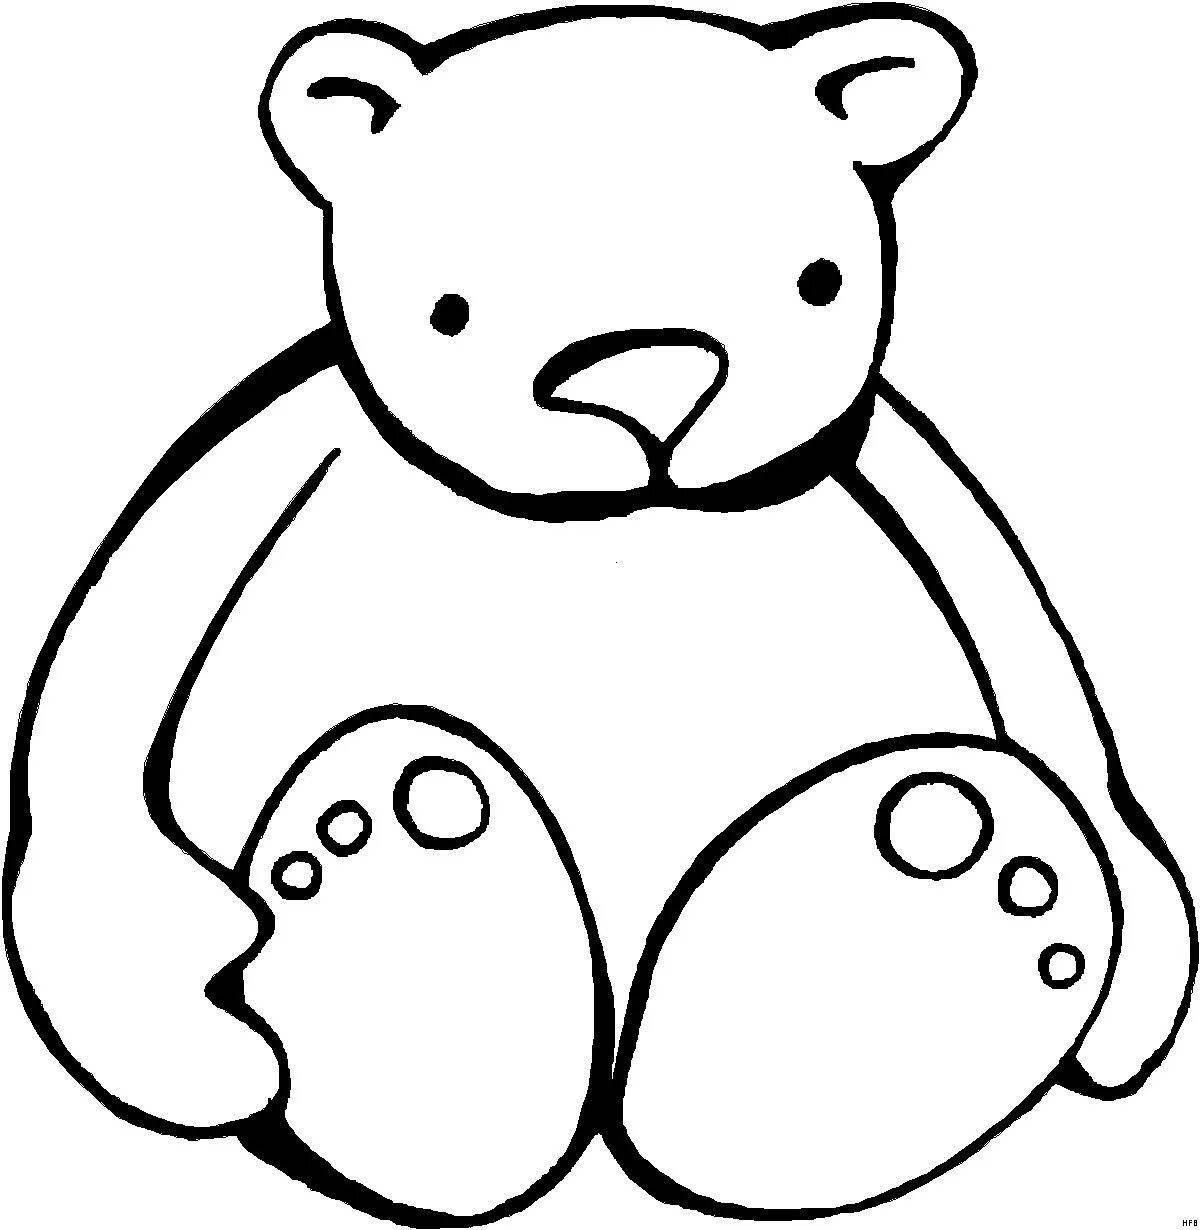 Joyful coloring bear for children 5-6 years old